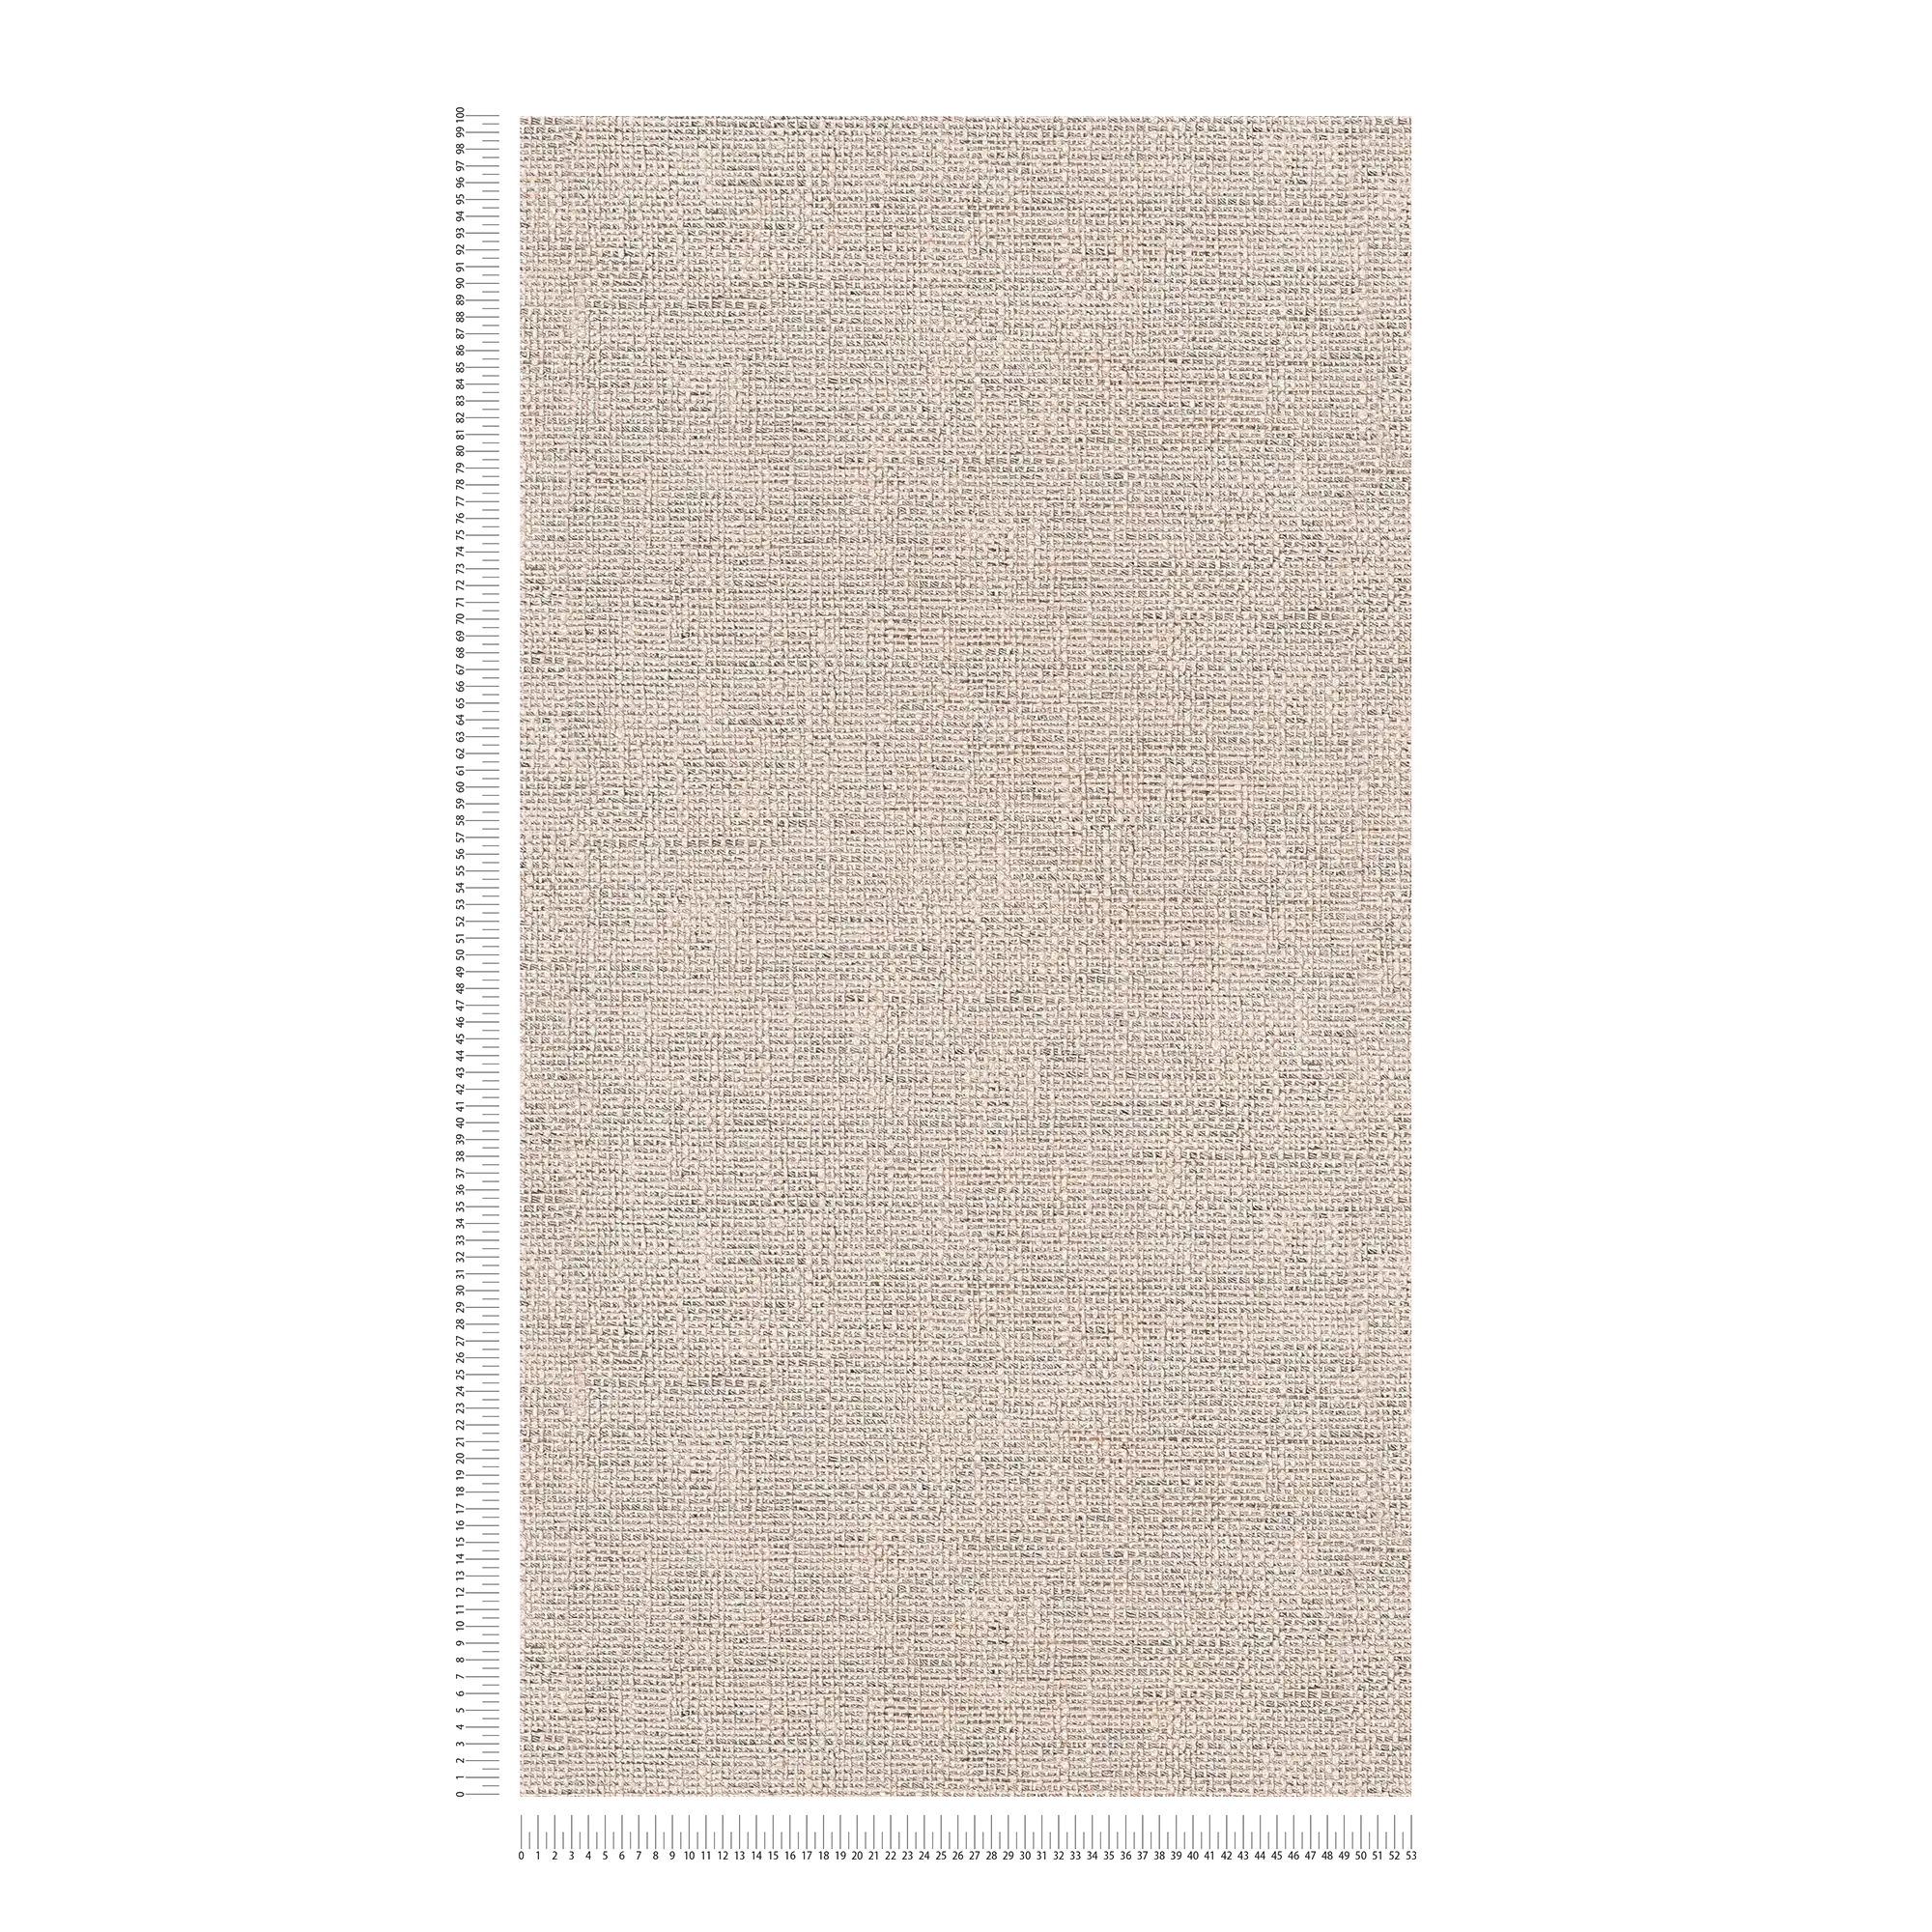             Papel pintado de aspecto de lino arpillera gruesa - Marrón, Blanco
        